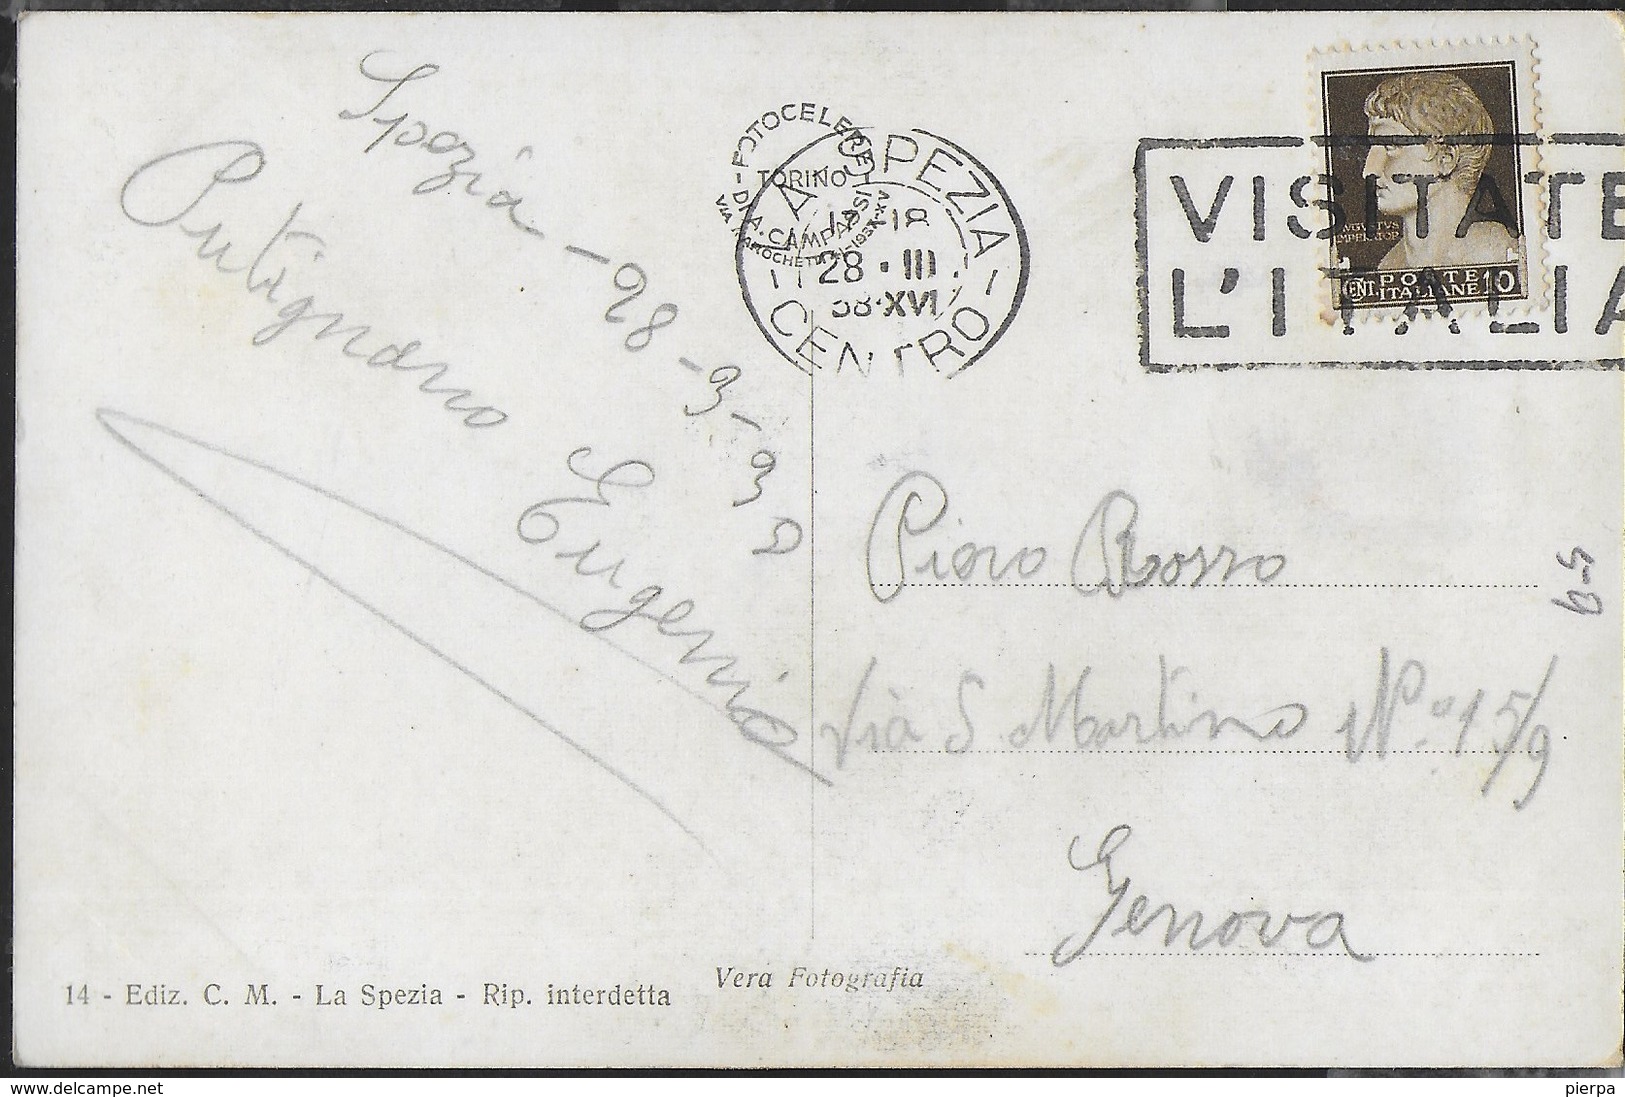 PALAZZO POSTE E TELEGRAFI  - LA SPEZIA - EDIZ. C.M. - VIAGGIATA 1938 - ANNULLO A TARGHETTA VISITATE L'ITALIA - Poste & Postini